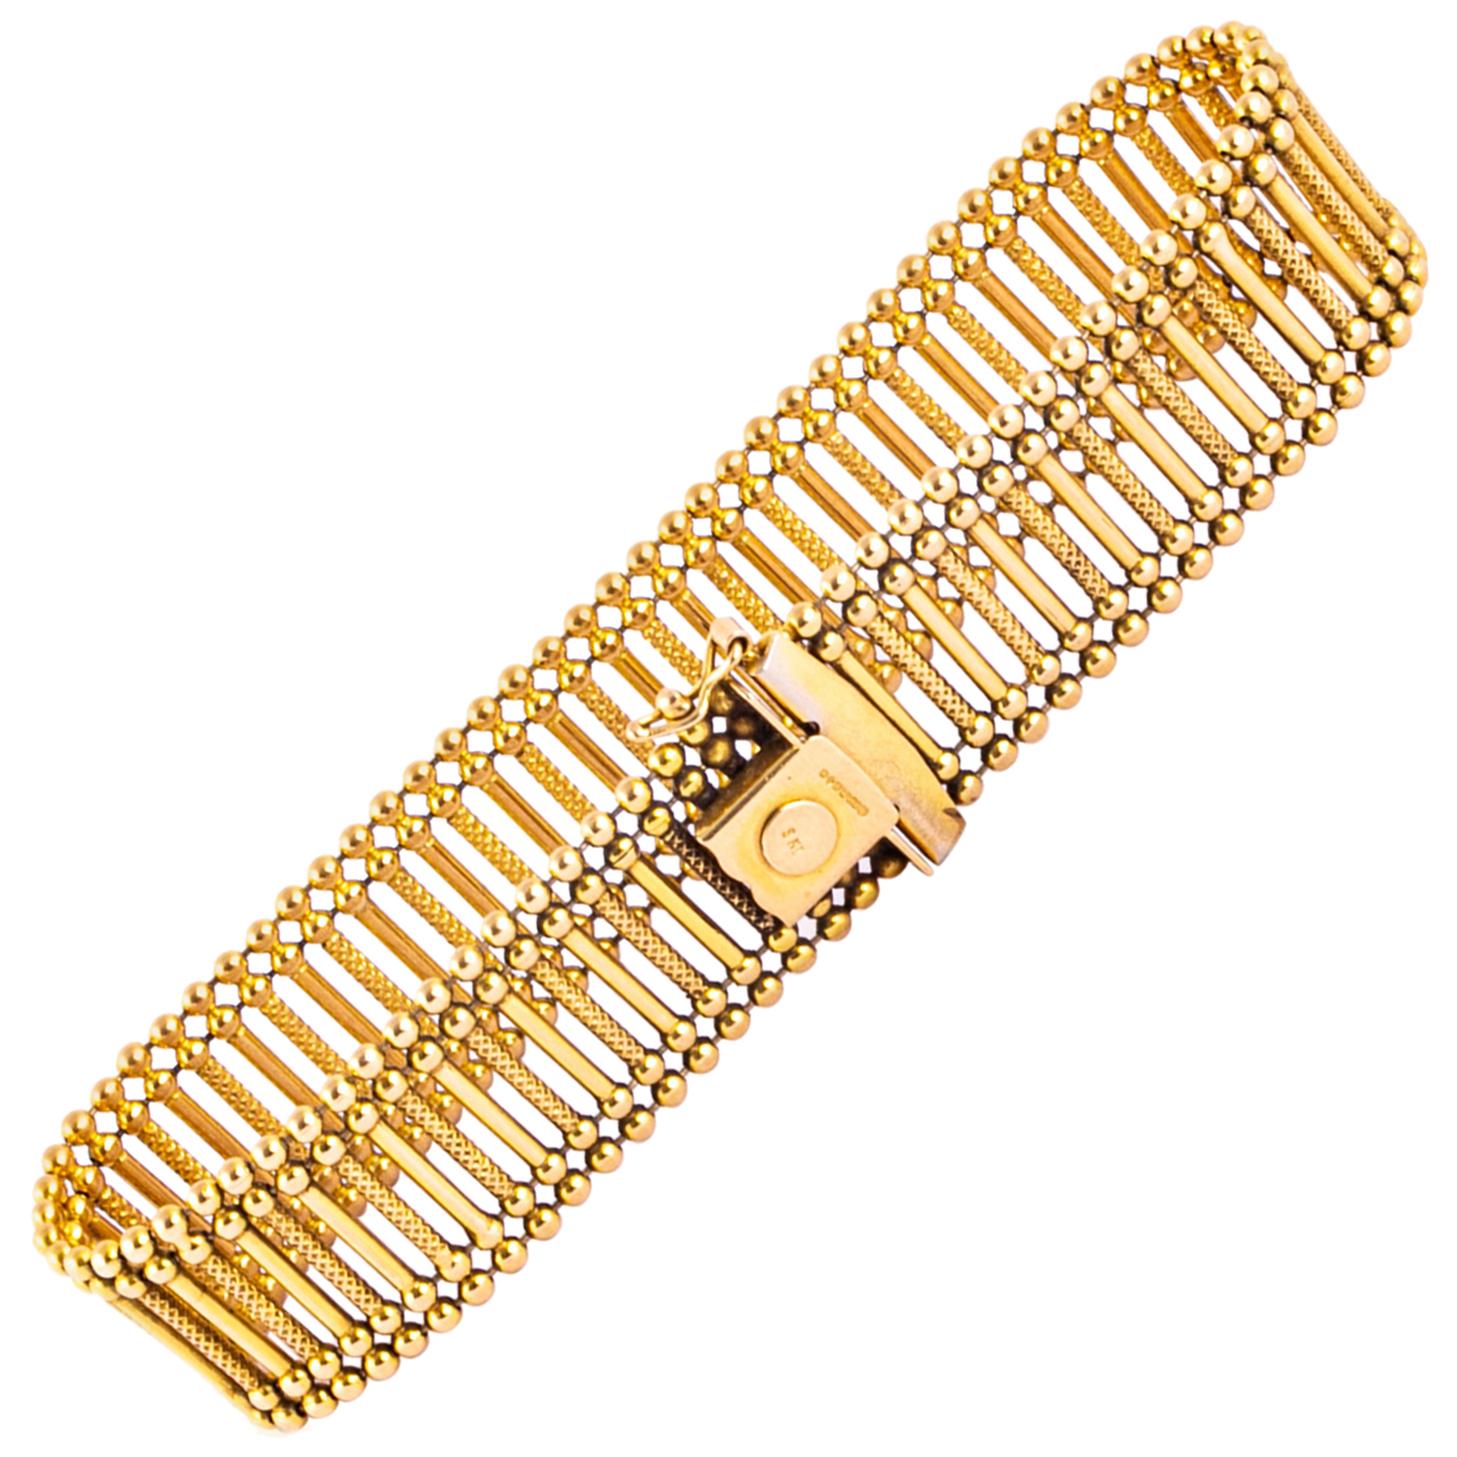 Vintage 9 Carat Gold Cuff Bracelet